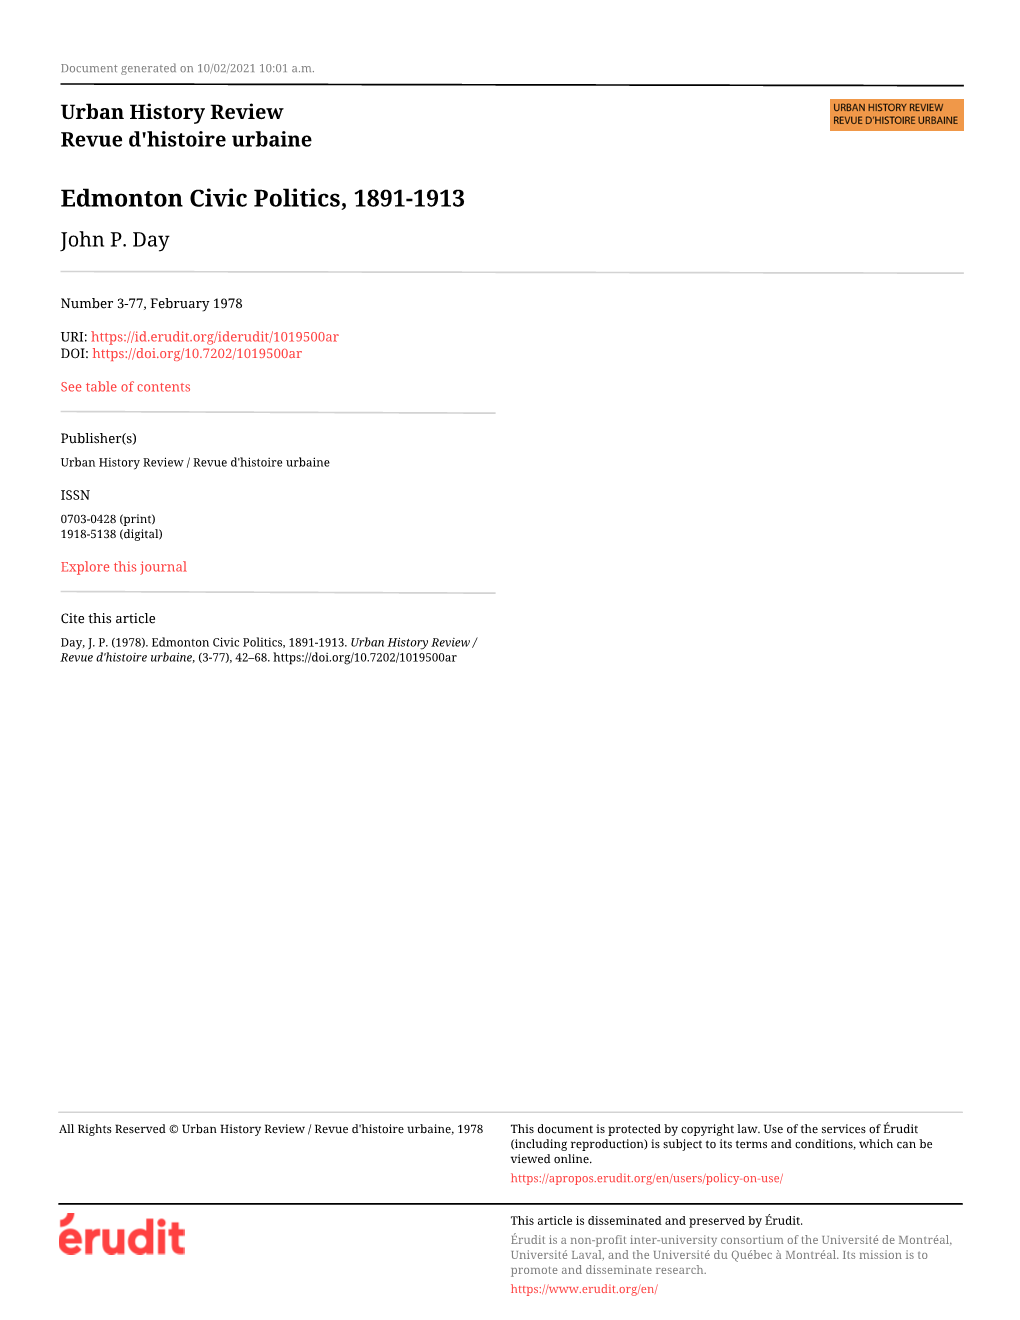 Edmonton Civic Politics, 1891-1913 John P